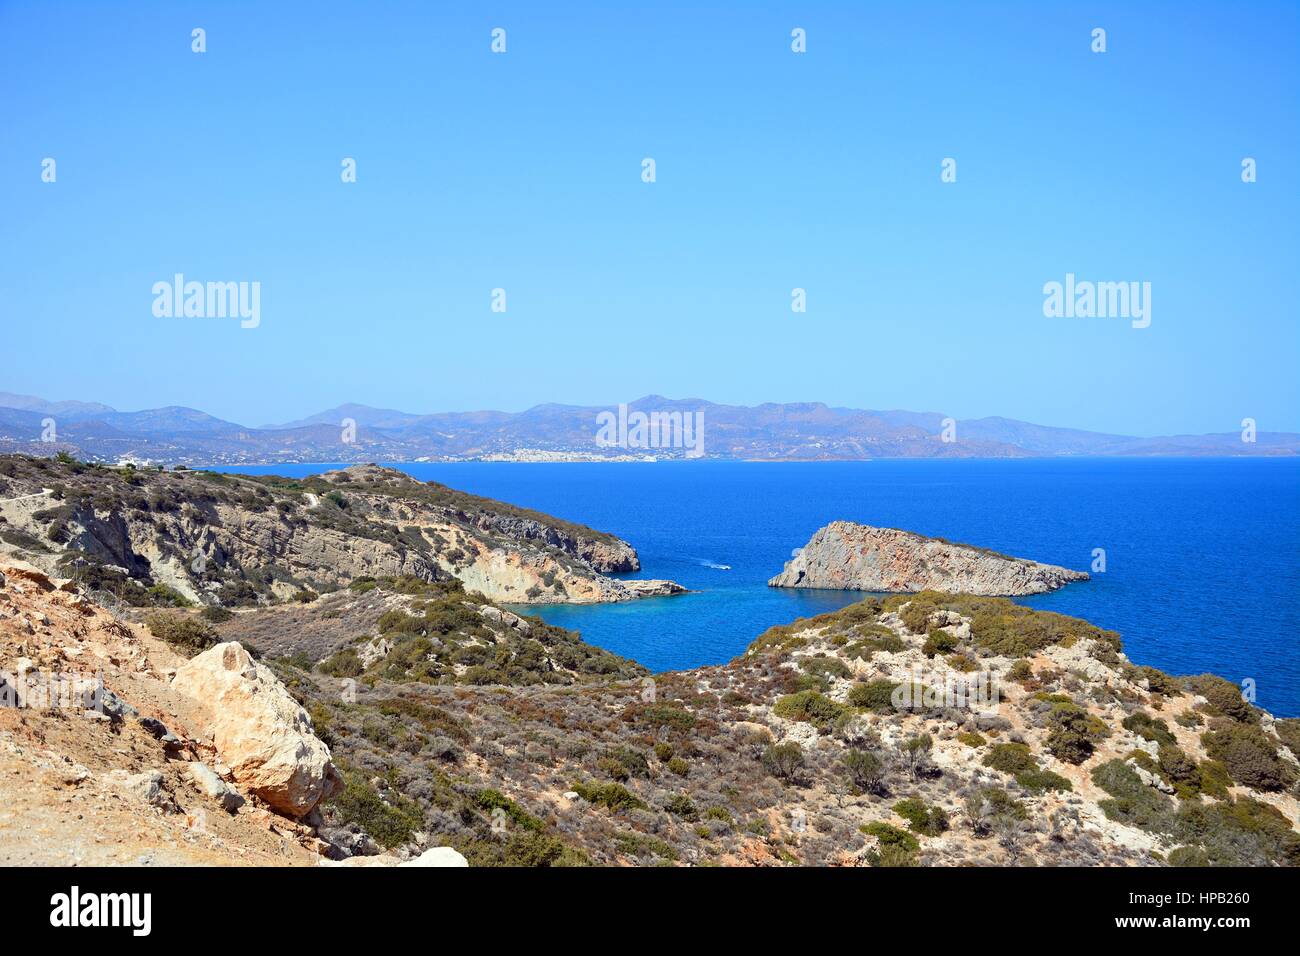 Elevated view of the beach and rugged coastline near Ammoudara, Crete, Greece, Europe. Stock Photo